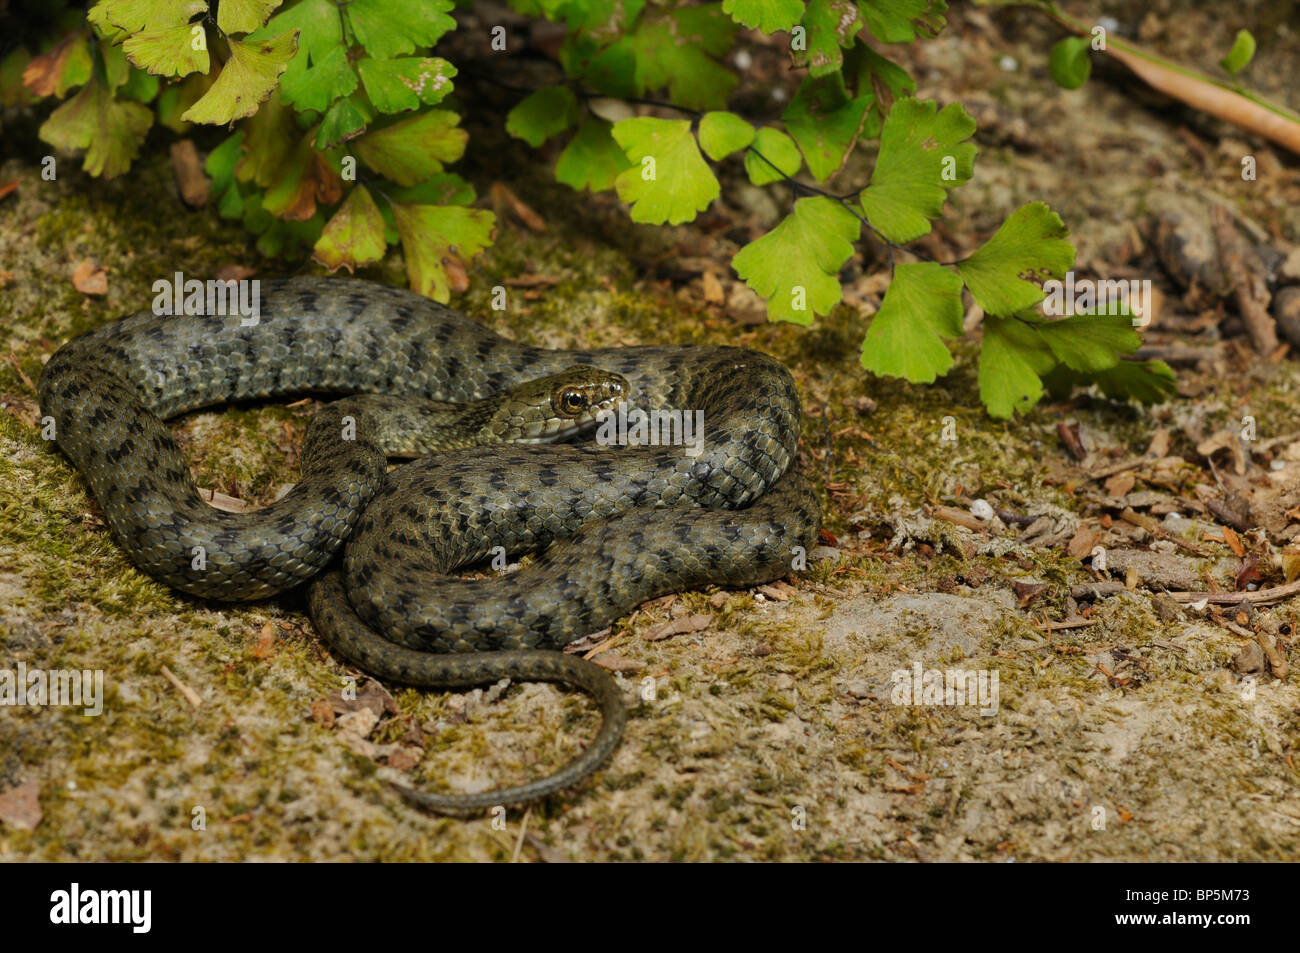 dice snake (Natrix tessellata), single individual, Greece, Creta, Greece Stock Photo